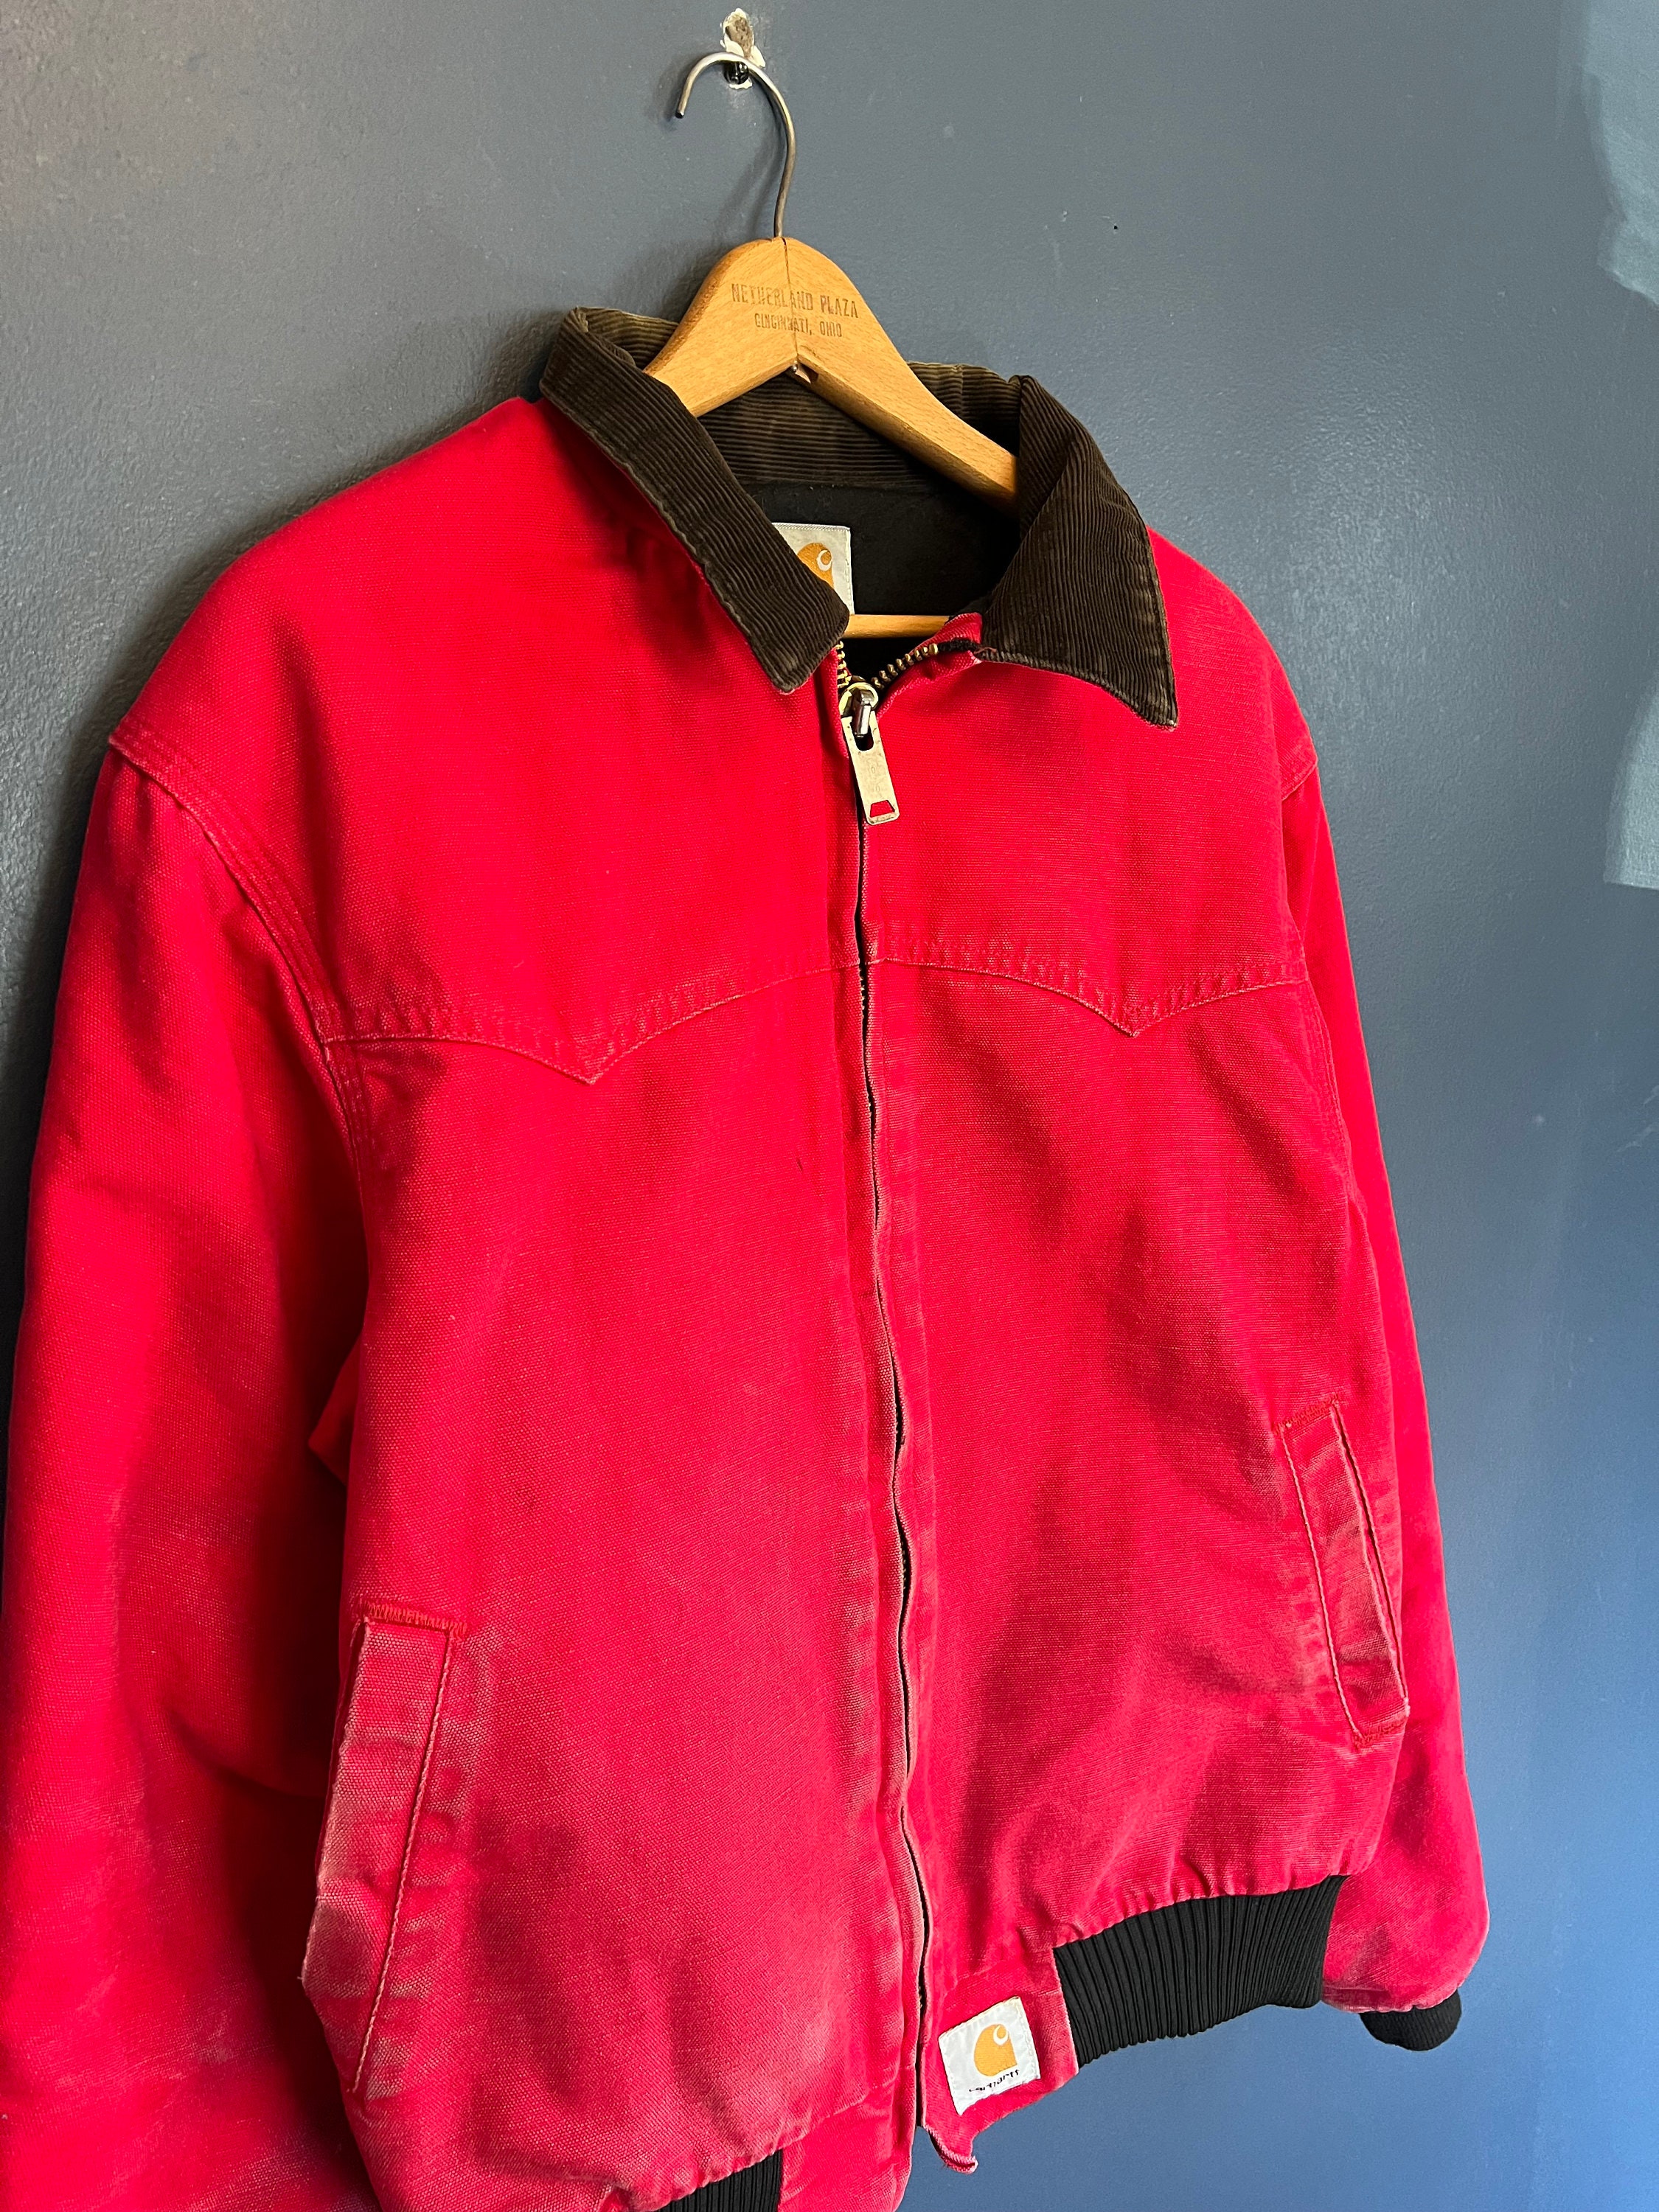 Vintage 90s Carhartt Santa Fe Red Corduroy Collar Zip up Work